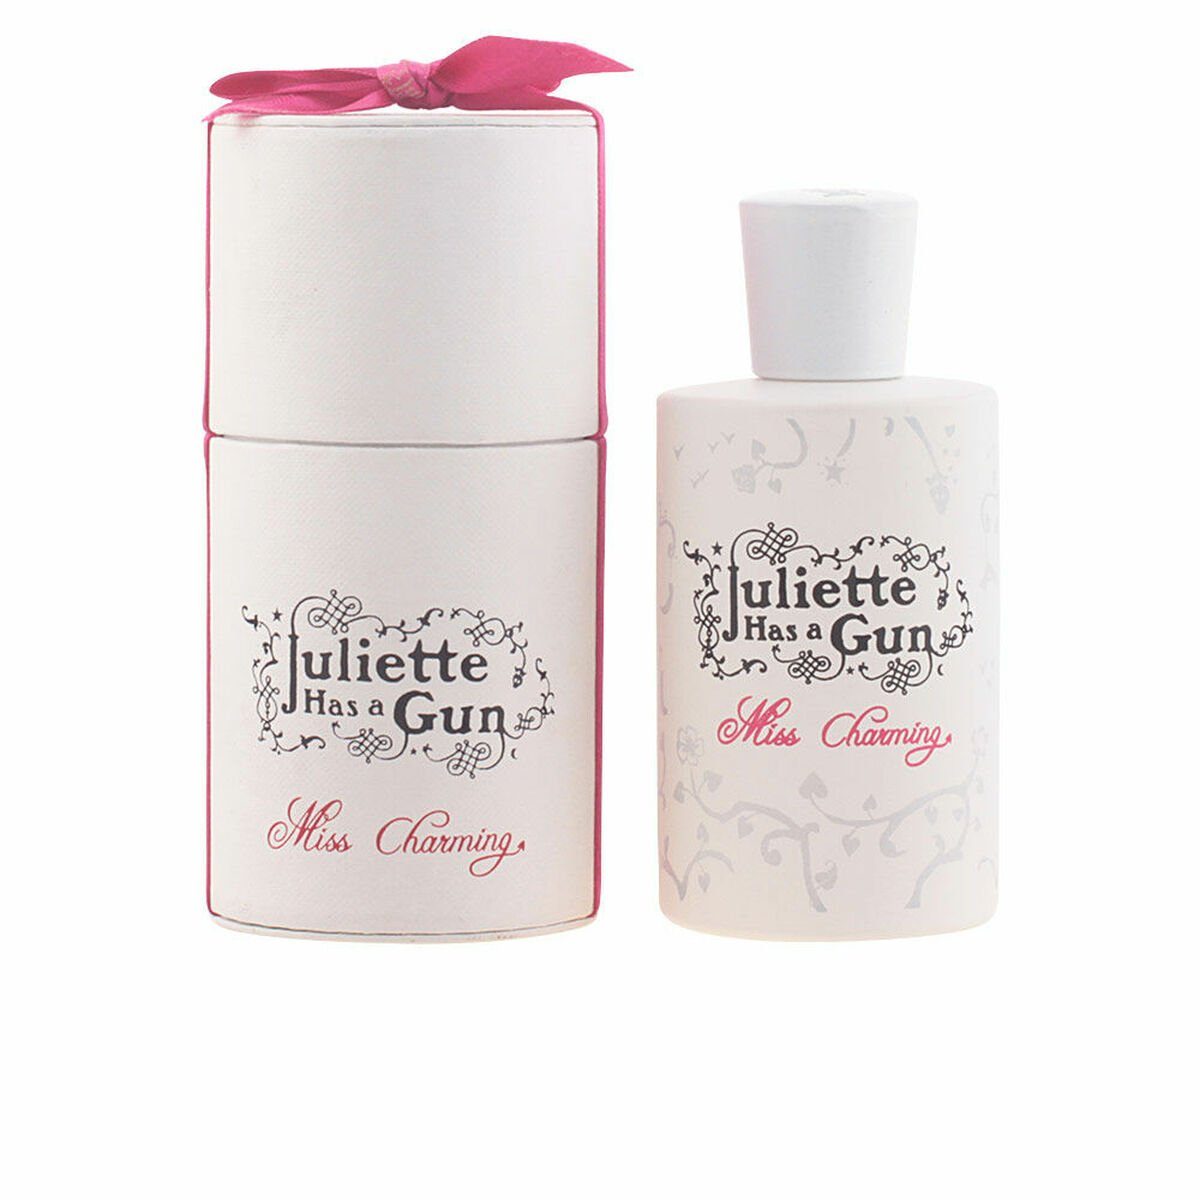 Eau Juliette Gun has Eau Gun a Miss A de Toilette Juliette Charming Has Parfum Damenparfüm 100 ml de